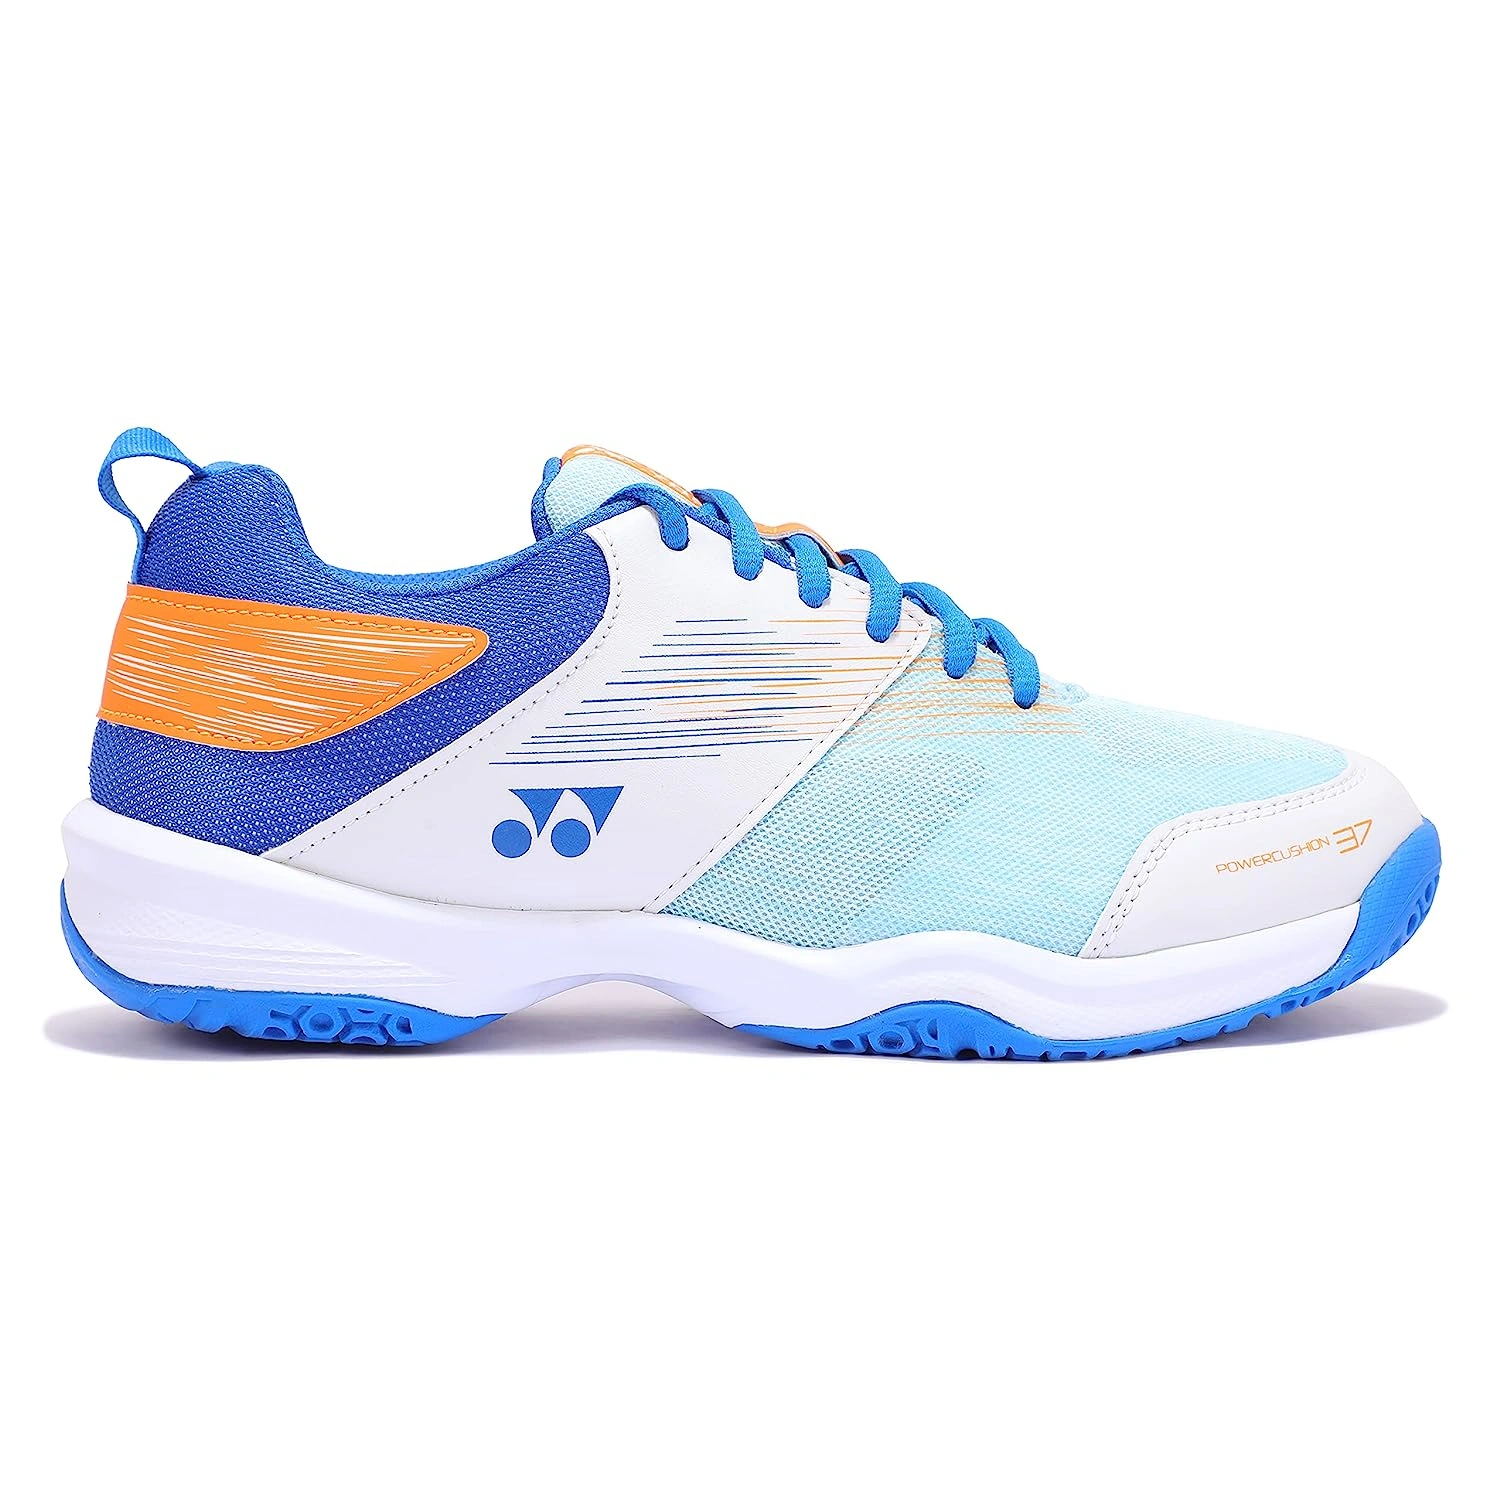 YONEX SHB 37EX Badminton Shoes-8-WHITE BLUE-1